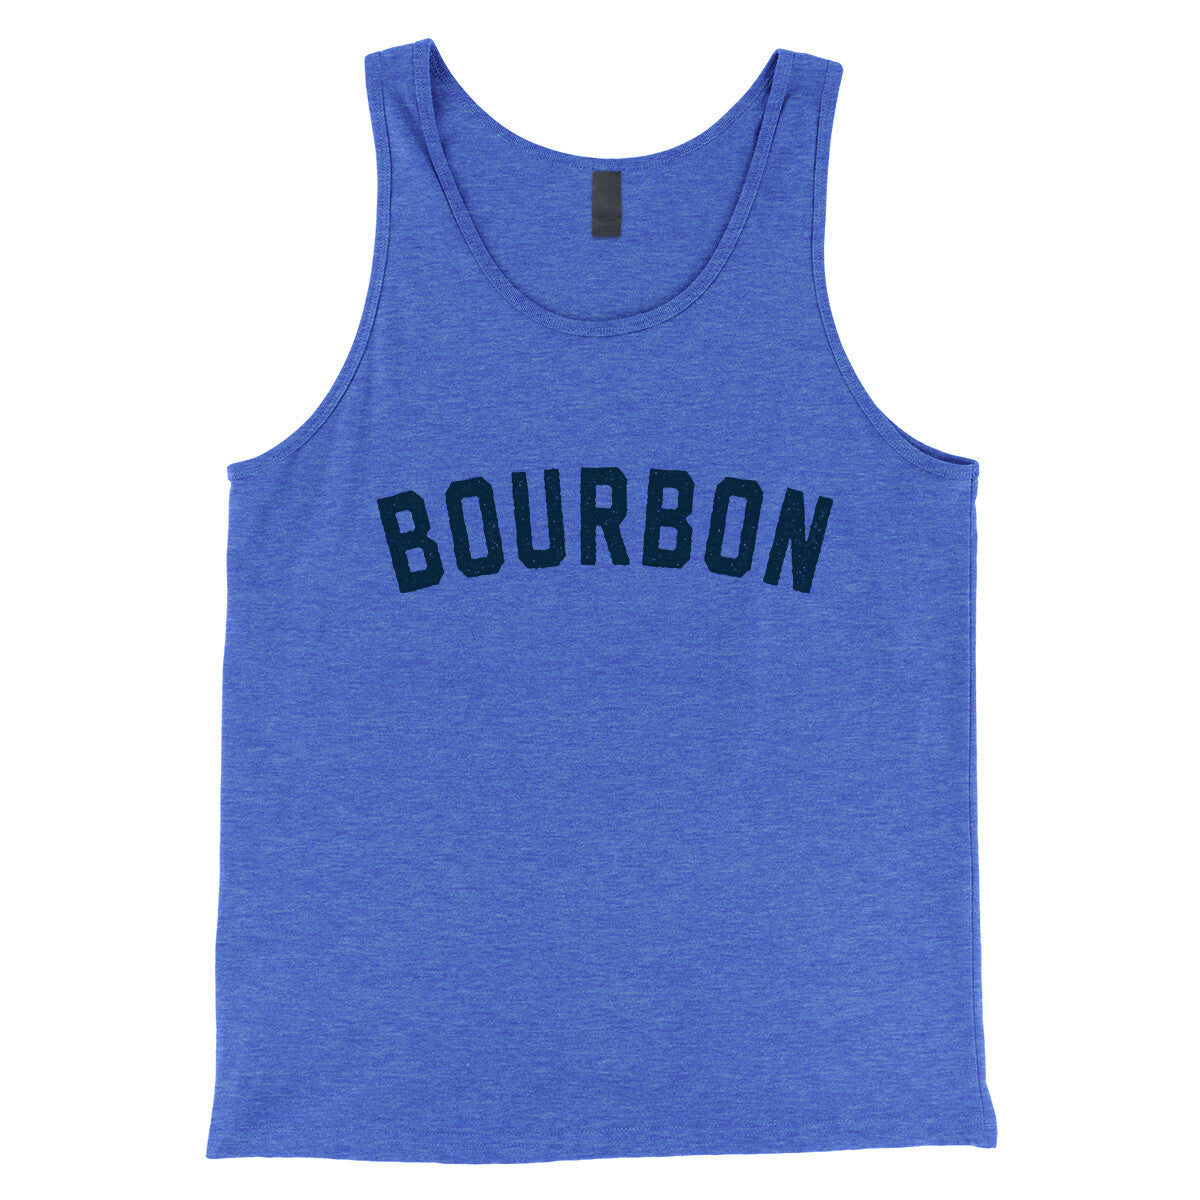 Bourbon in True Royal TriBlend Color